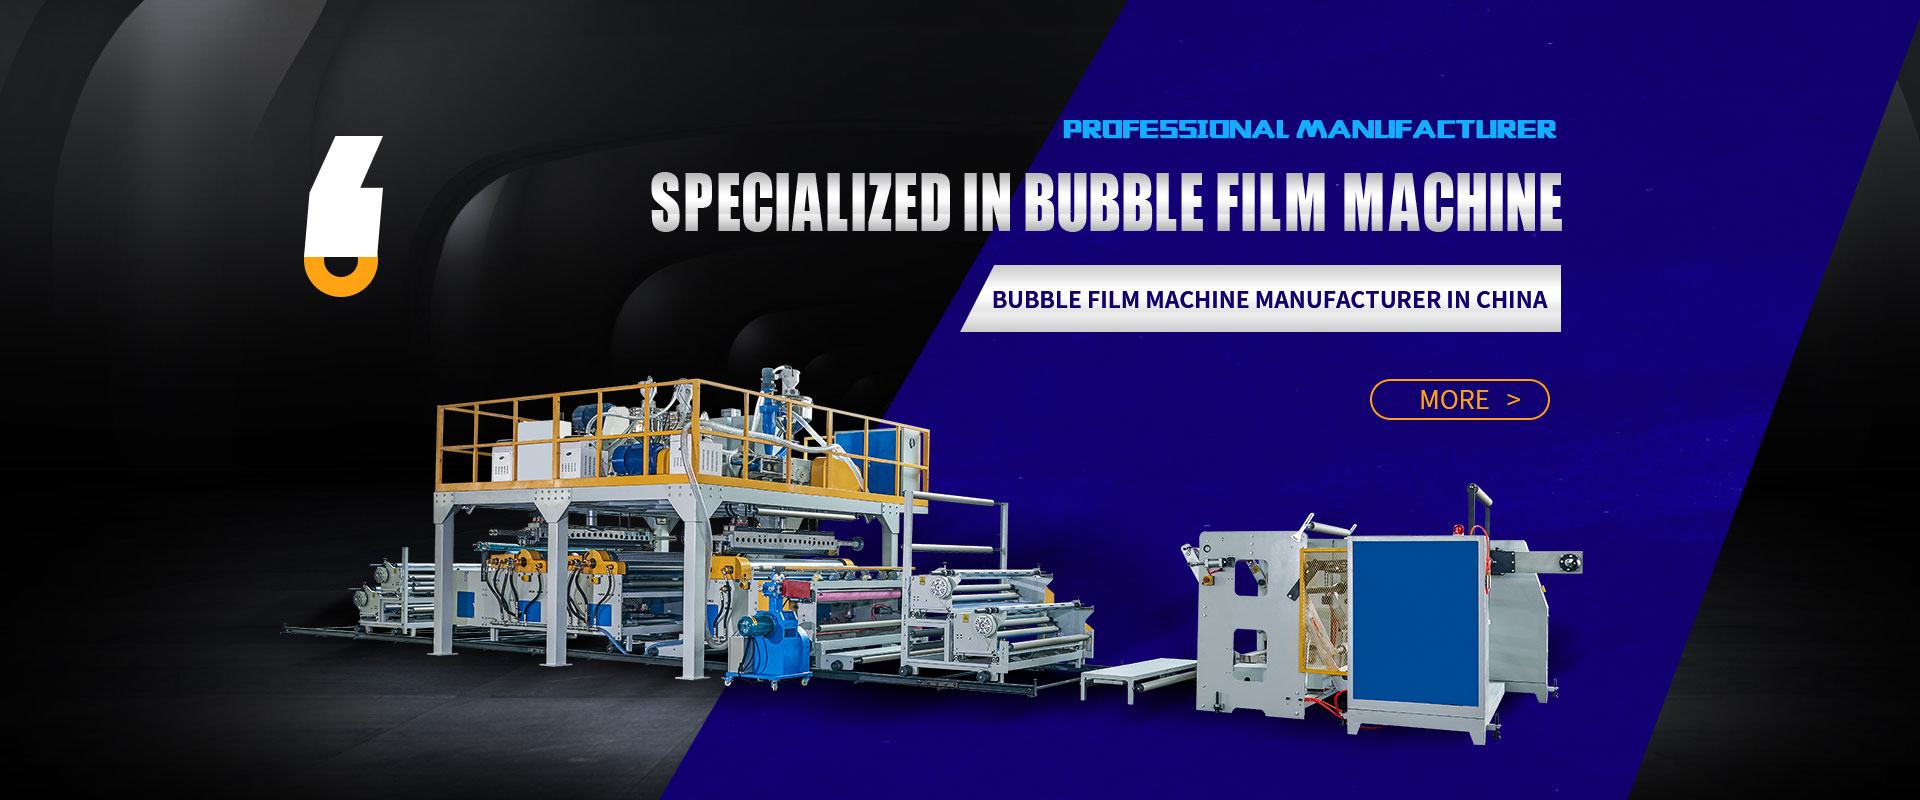 China bubble film equipment manufacturer